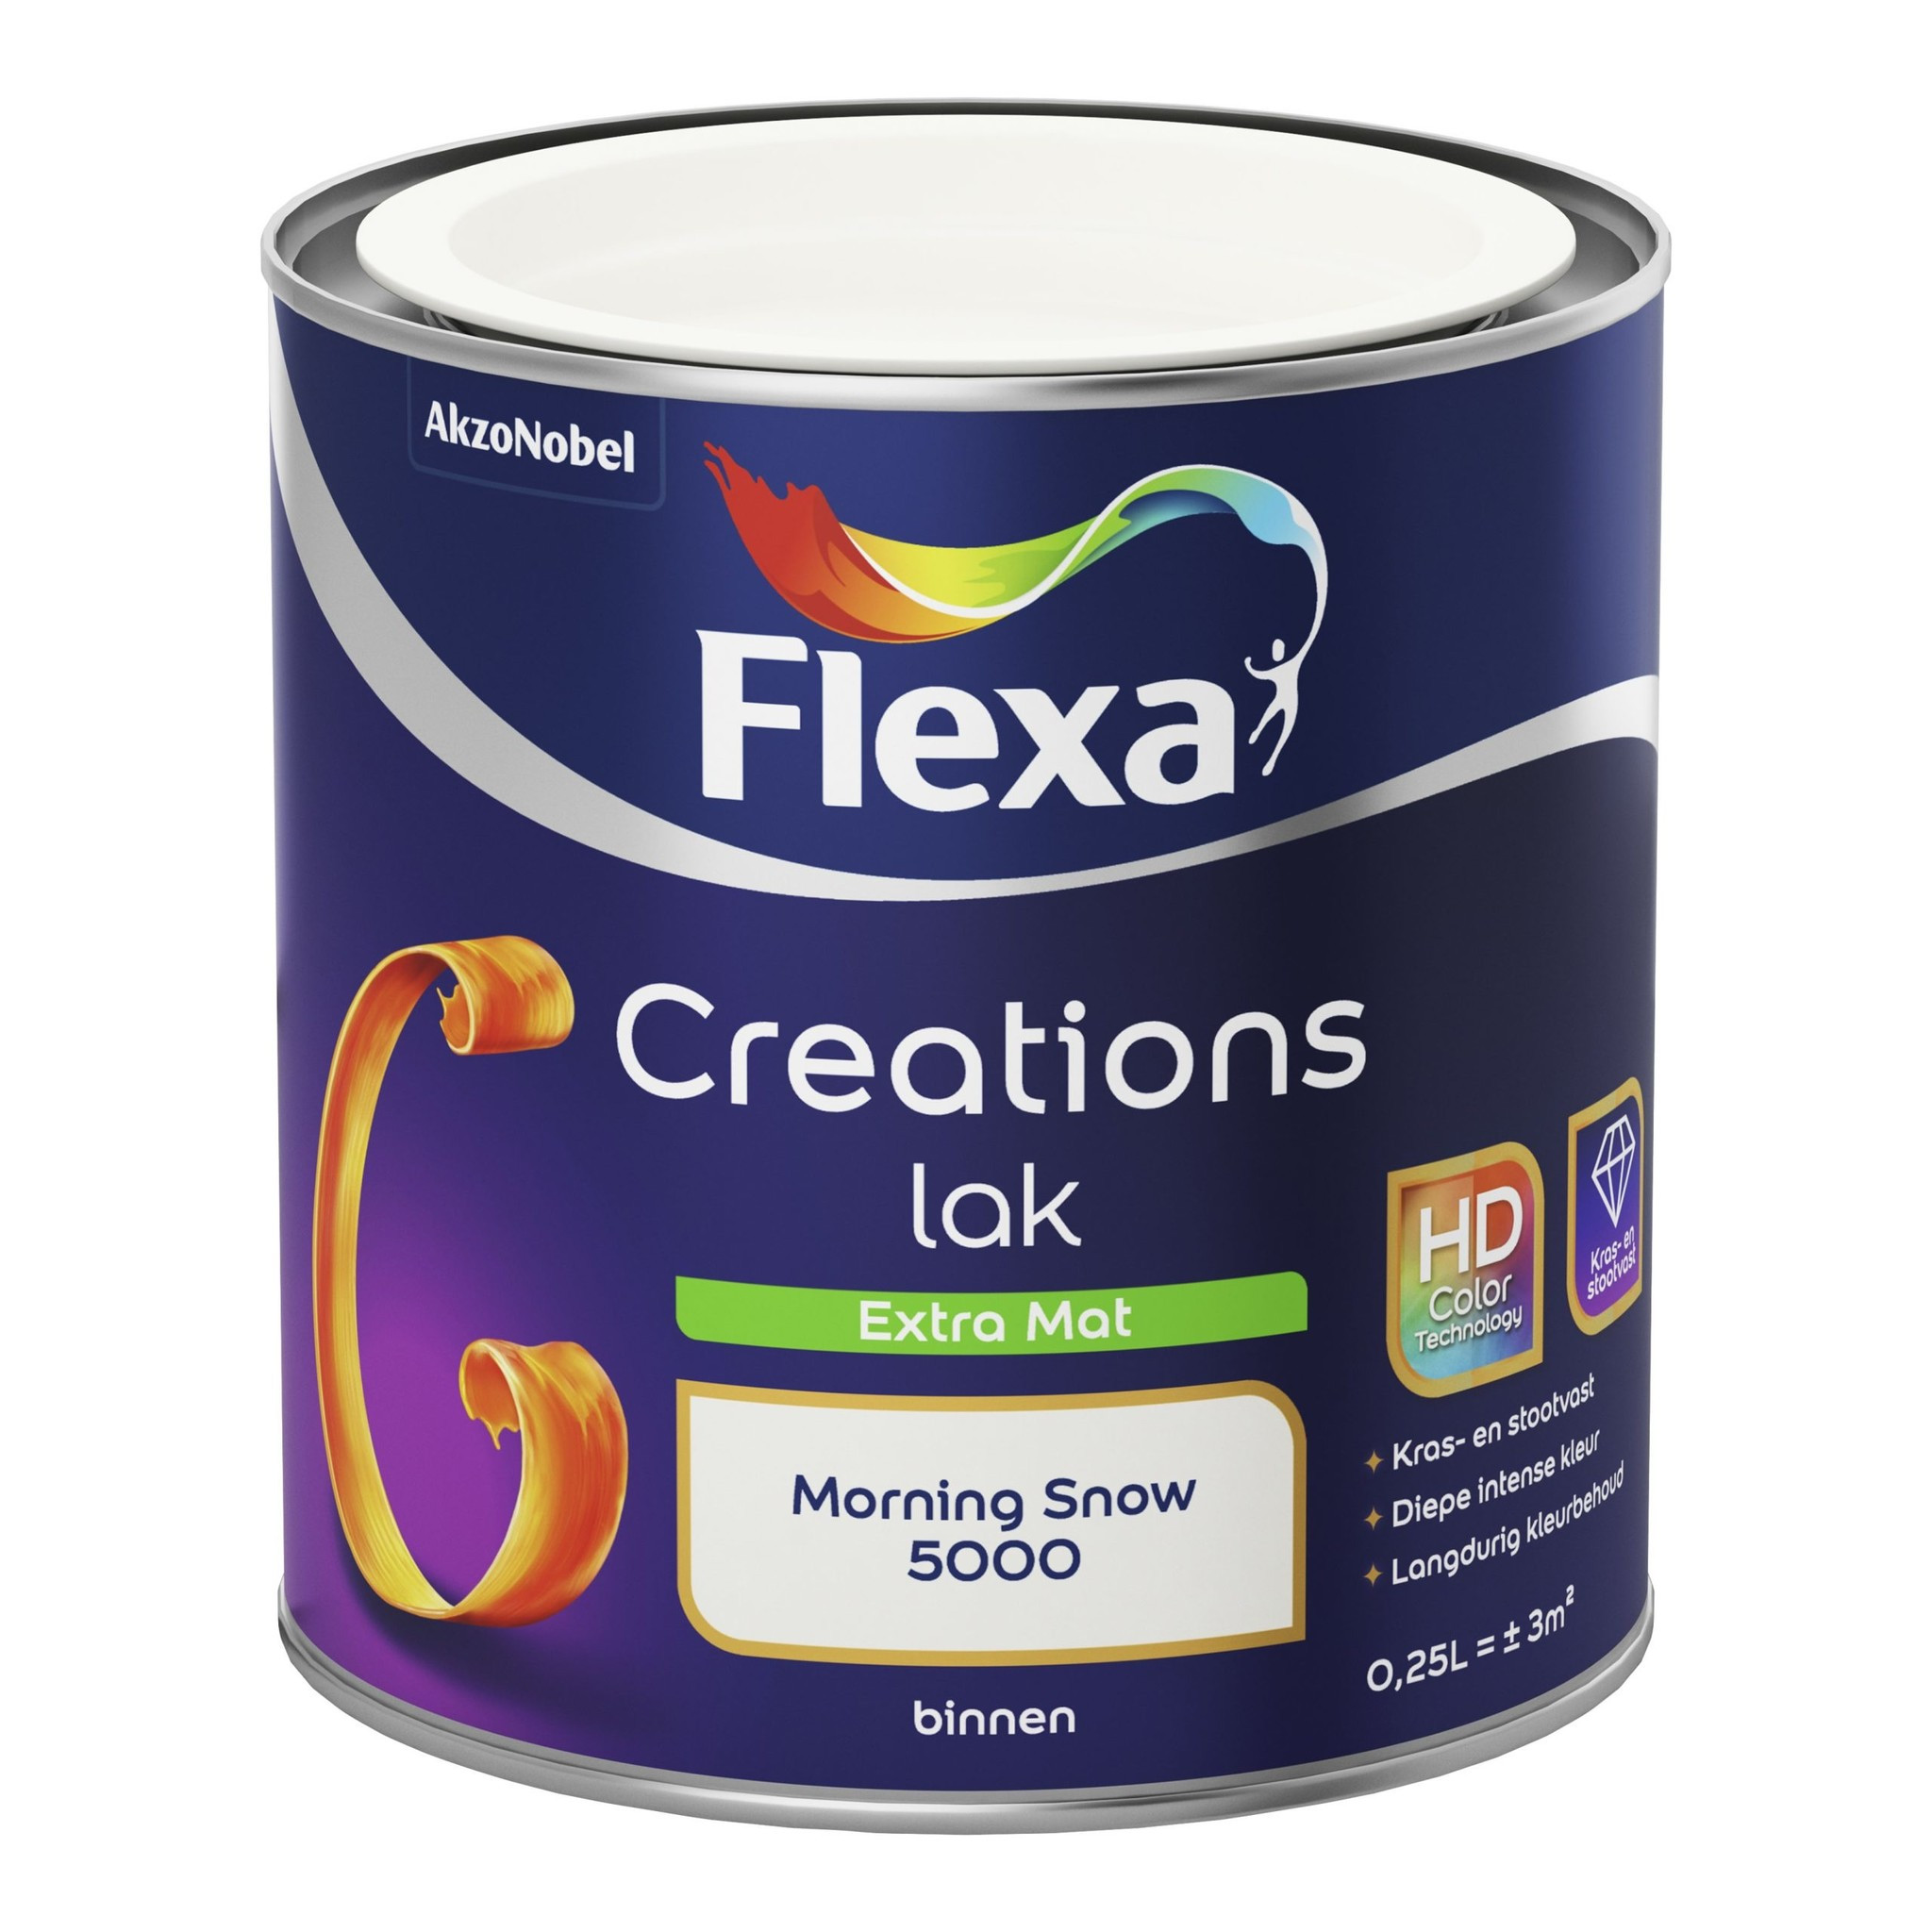 Flexa Creations Lak Extra Mat - Morning Snow